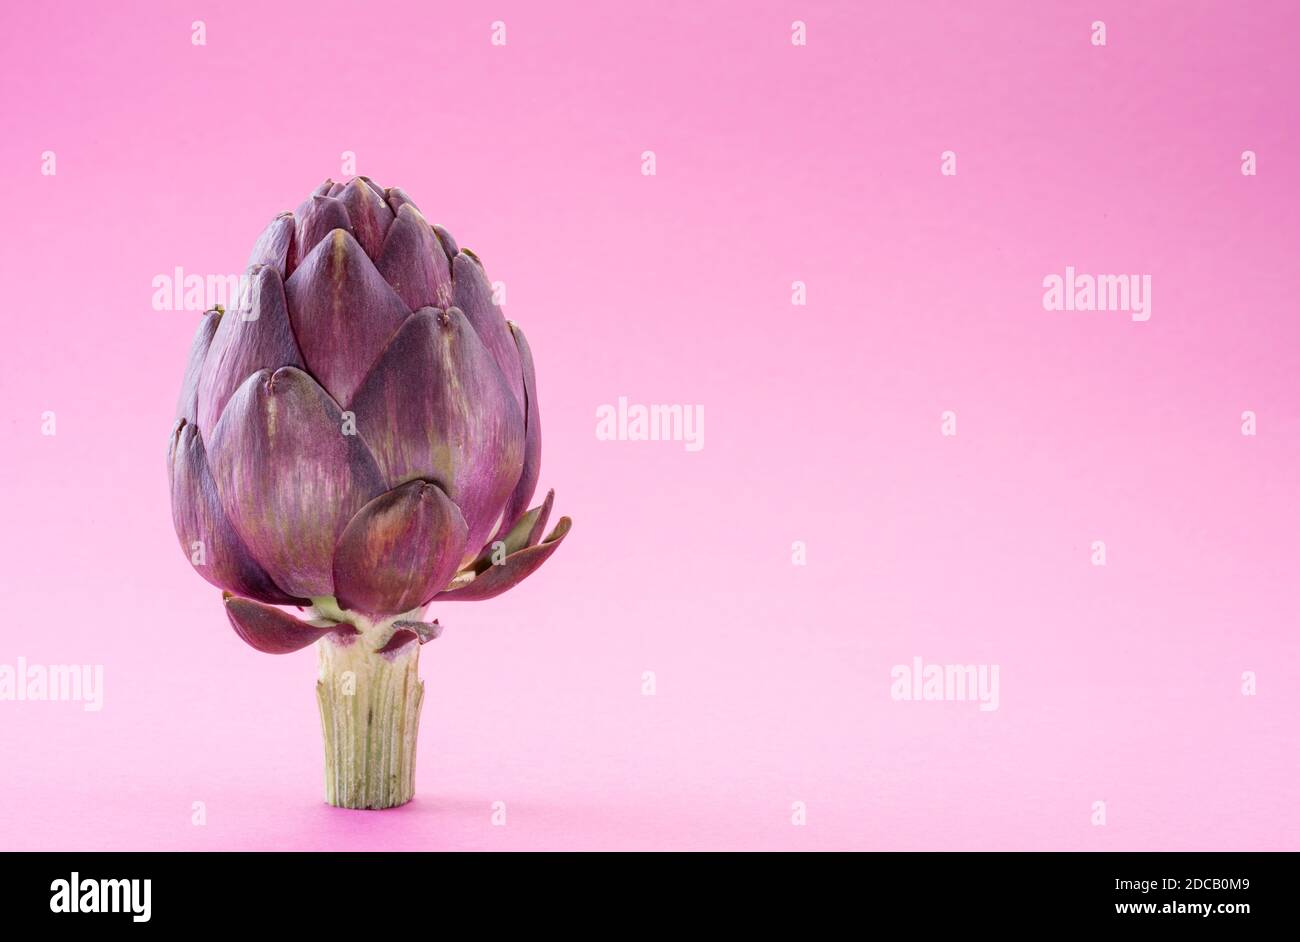 Artichoke flower, purple edible bud isolated on pink background. Stock Photo